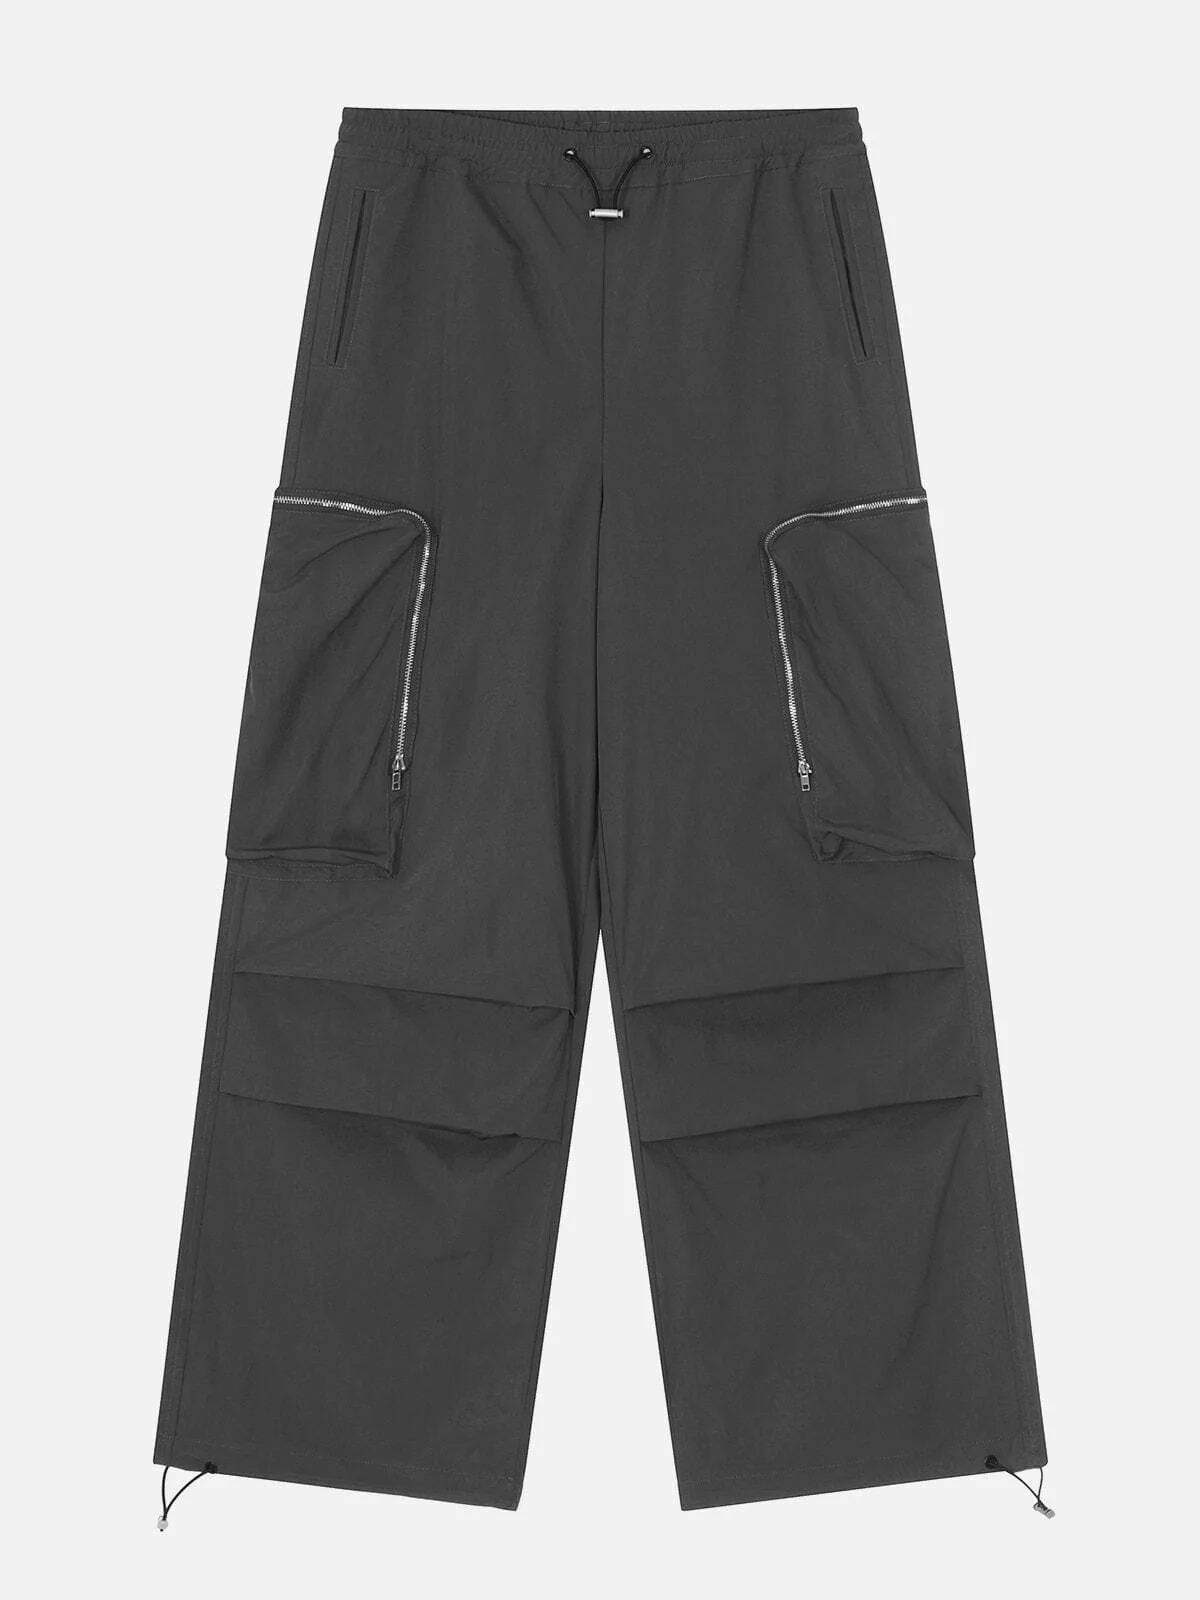 functional big pocket pants urban streetwear 3345